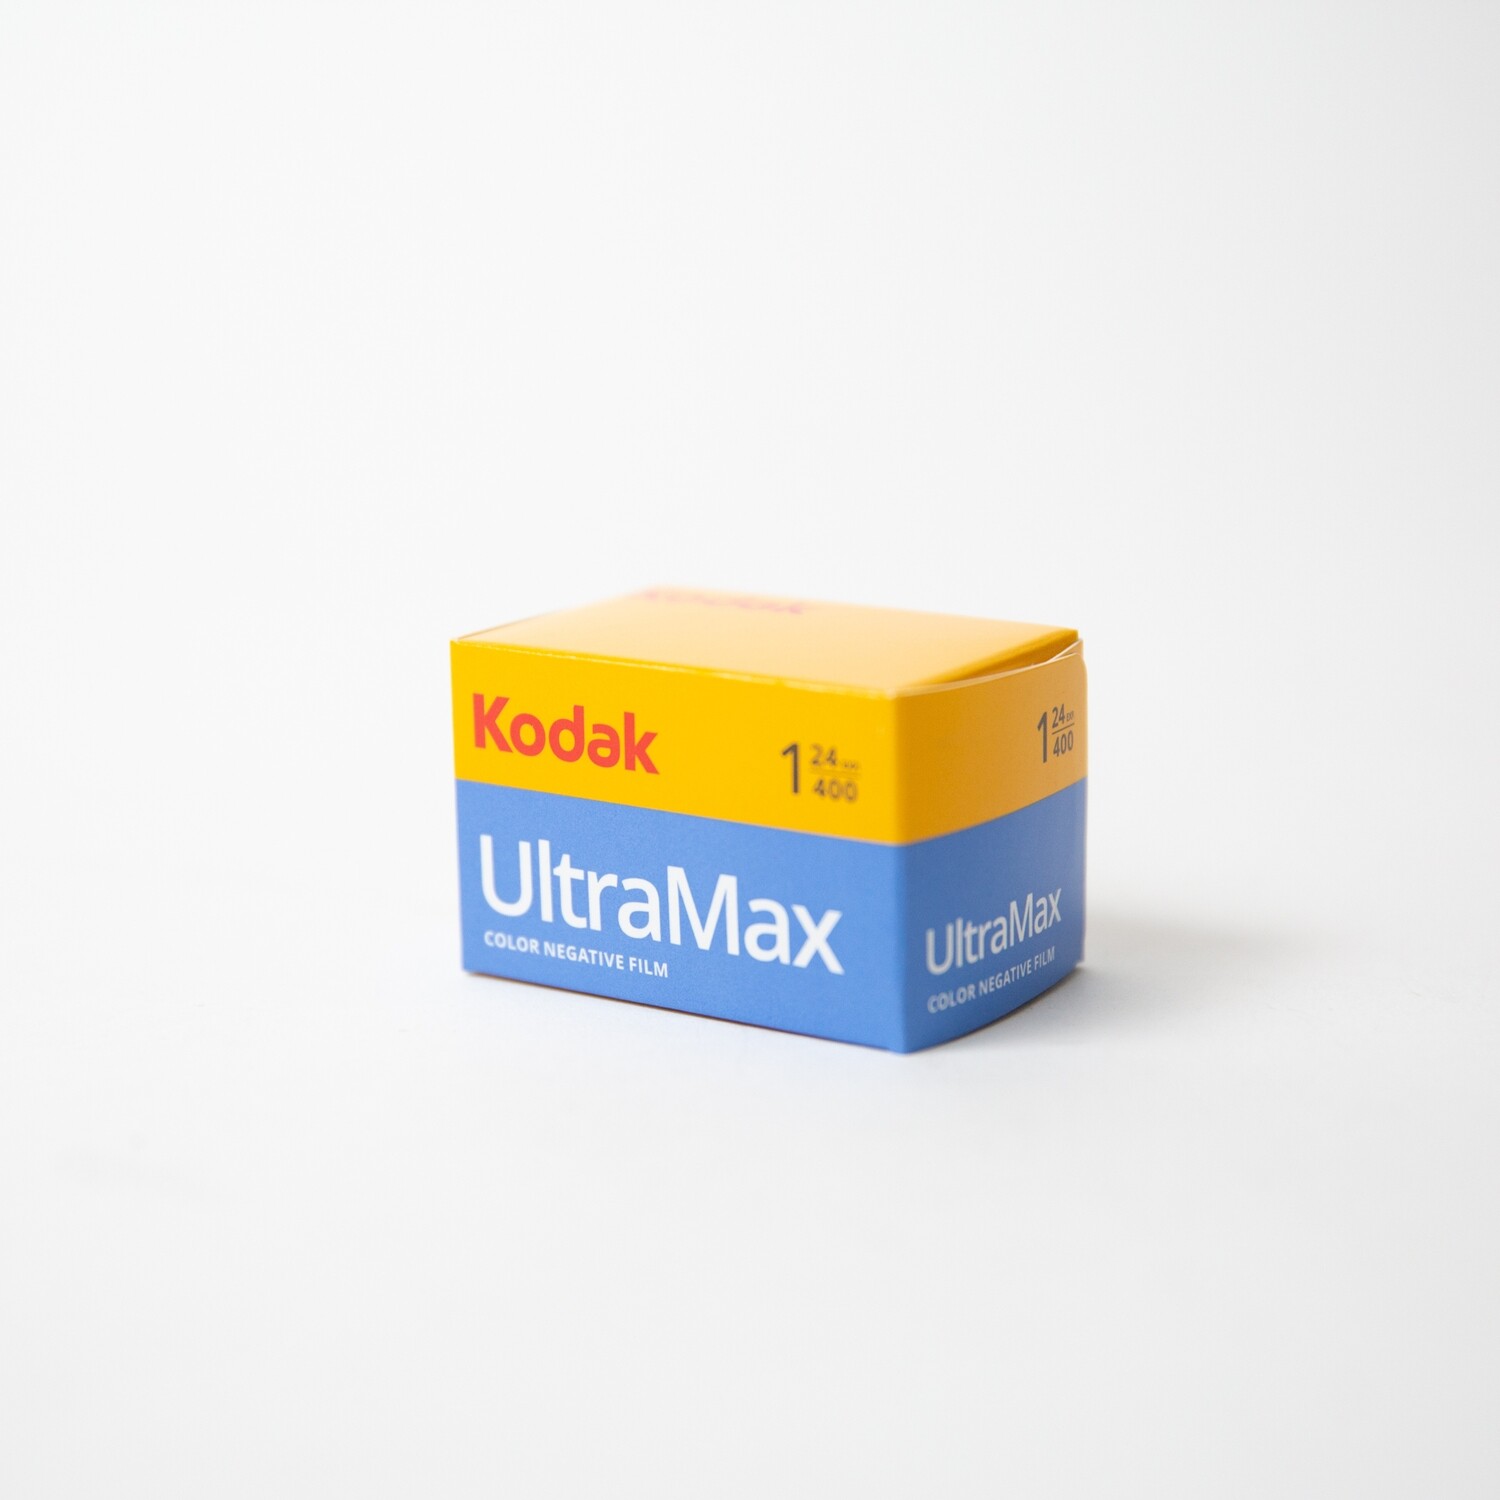 BUY FILM - Kodak UltraMax 400 35mm [24 EXP]